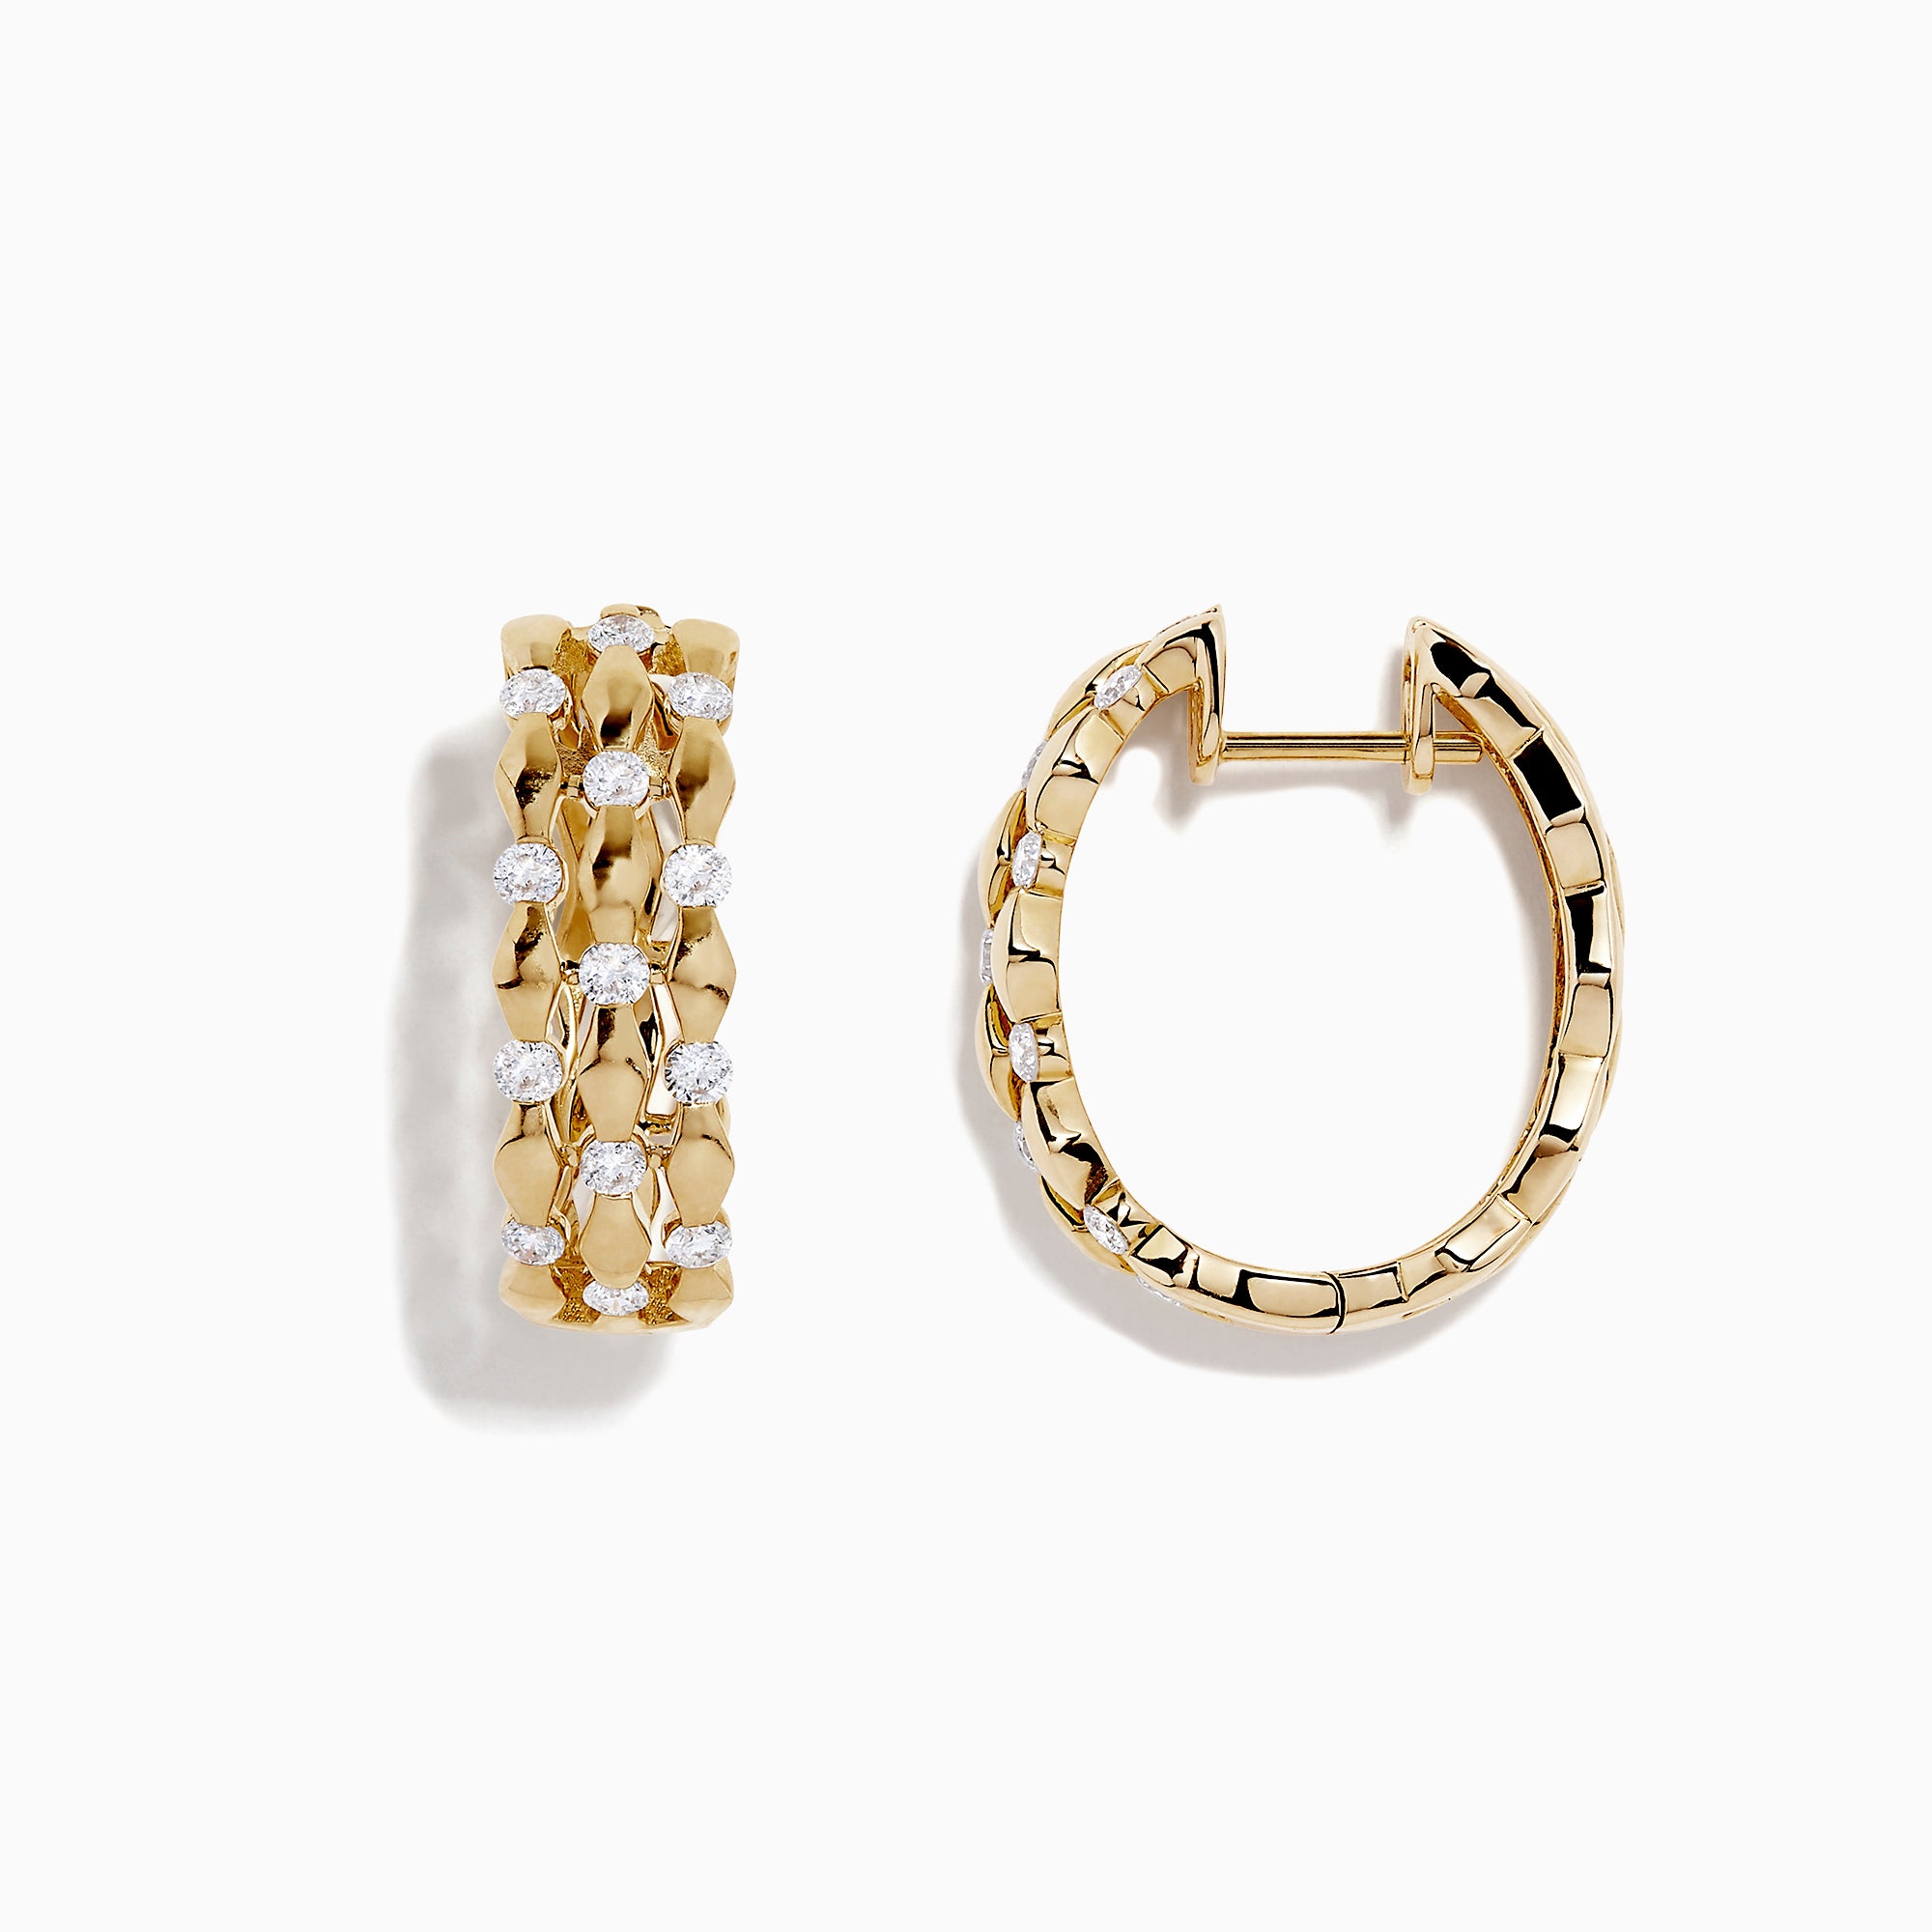 Effy D'Oro 14K Yellow Gold Diamond Huggie Hoop Earrings, 0.76 TCW